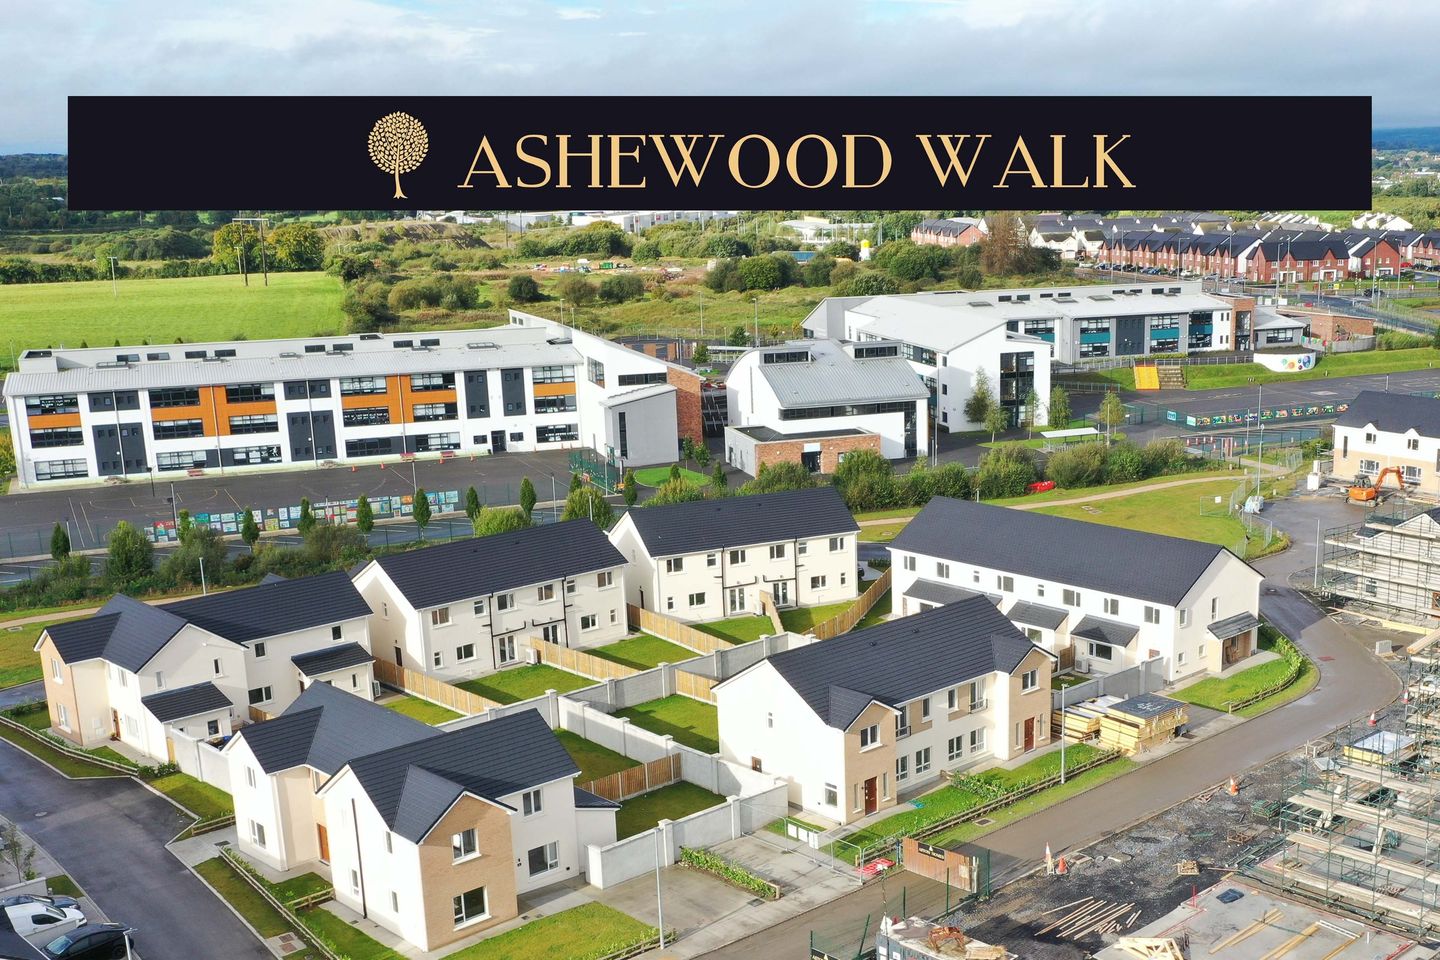 The A1, Ashewood Walk, Ashewood Walk, Stradbally Road, Portlaoise, Co. Laois